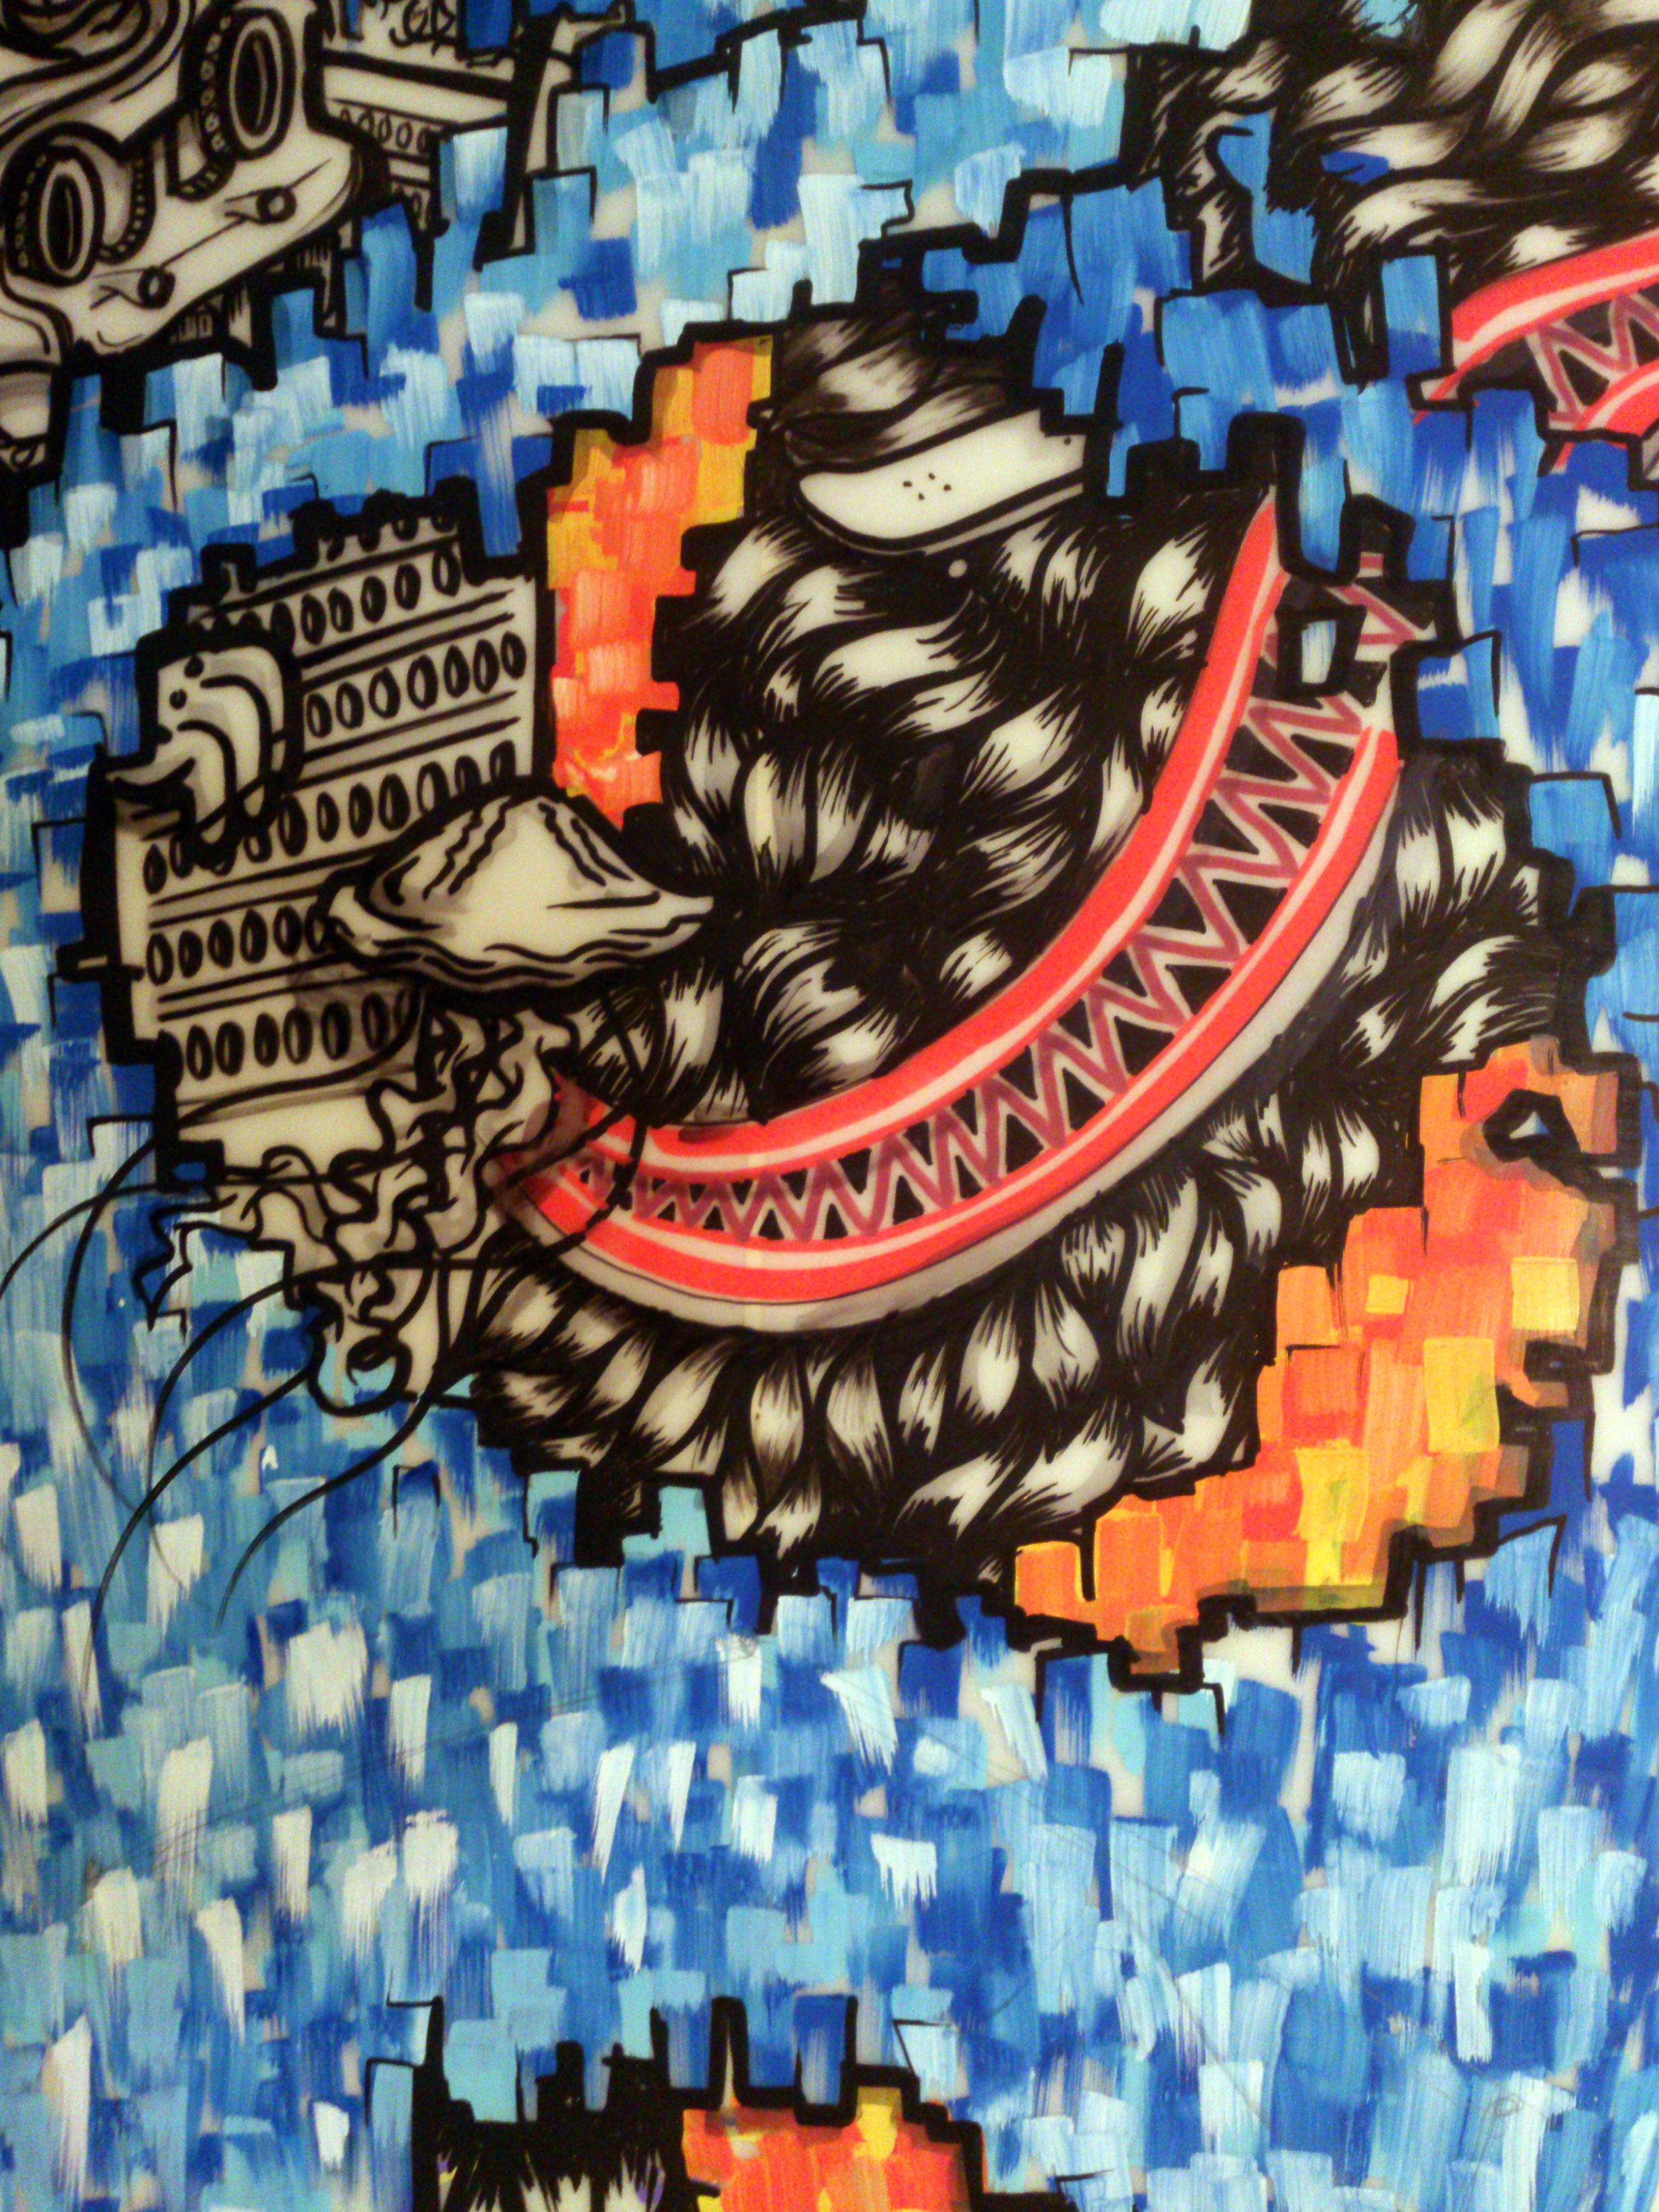 jellyfish-surfing-art-custom-deck-handmade-handpainted-sam-shennan-ud3-posca-artwork-orange-blue-black.jpg